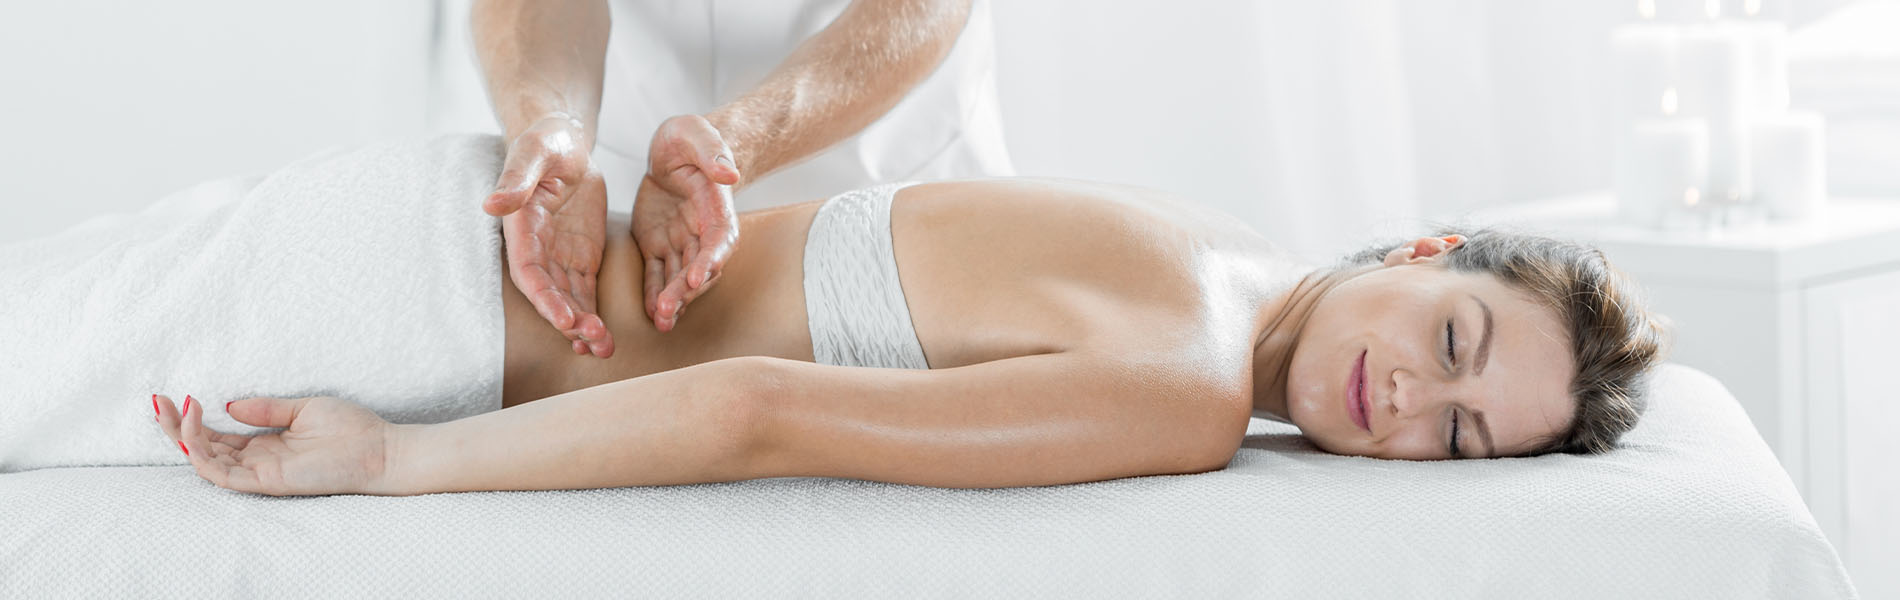 Woman enjoying a relaxing massage.